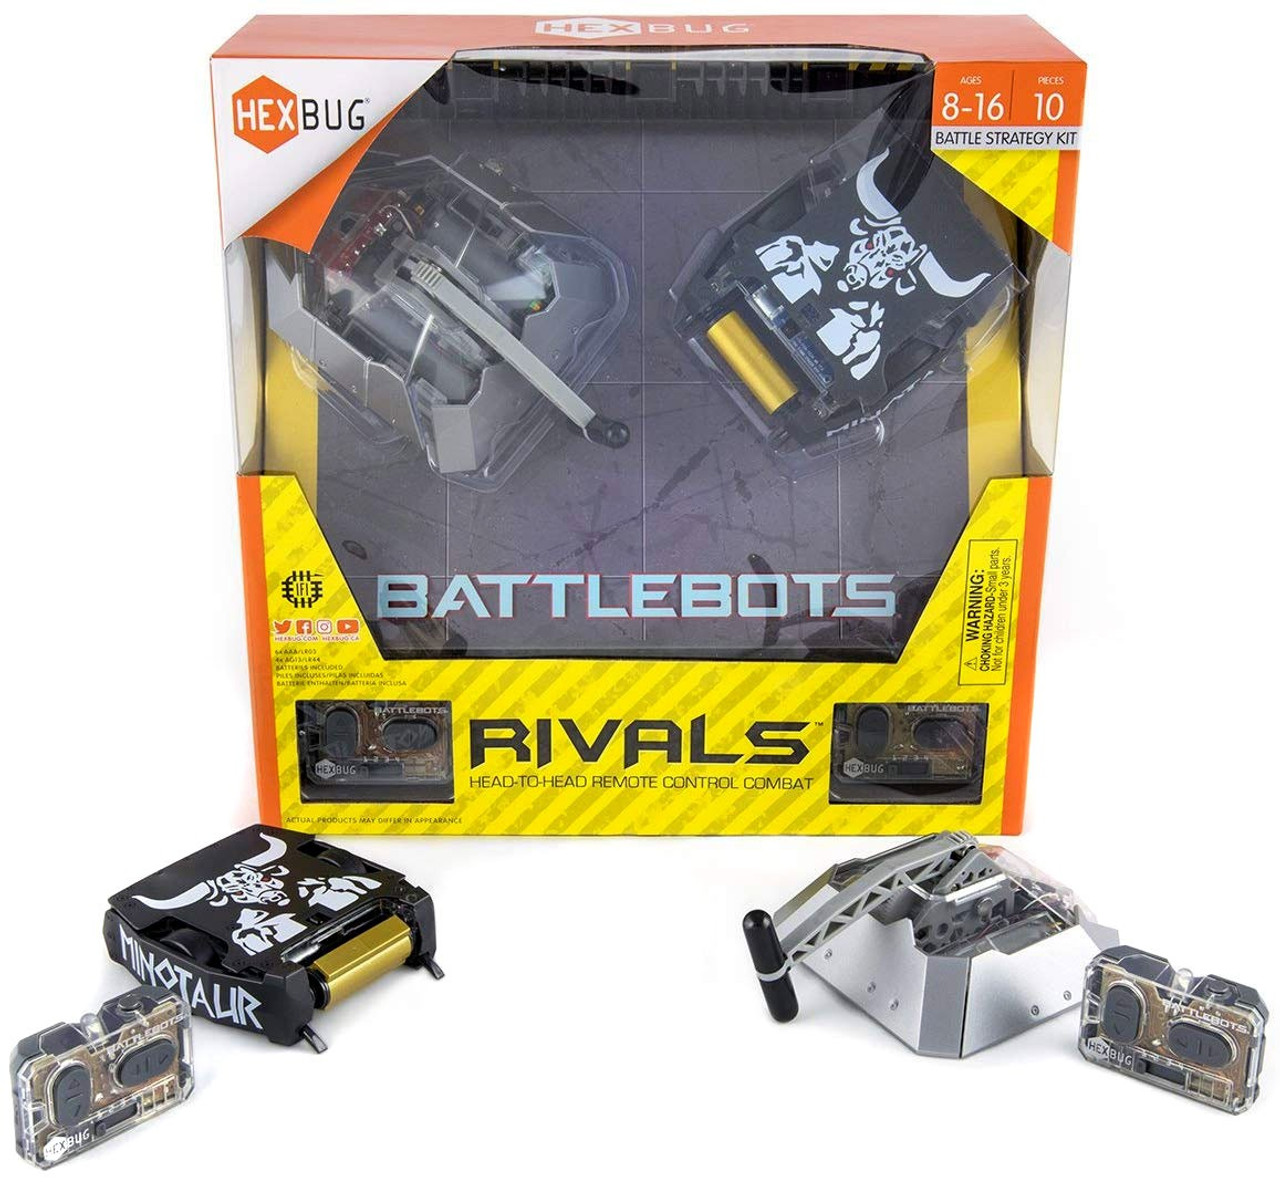 Hexbug Battlebots Rivals Beta Vs Minotaur Battle Strategy Kit Innovation First Toywiz - roblox build battle innovation